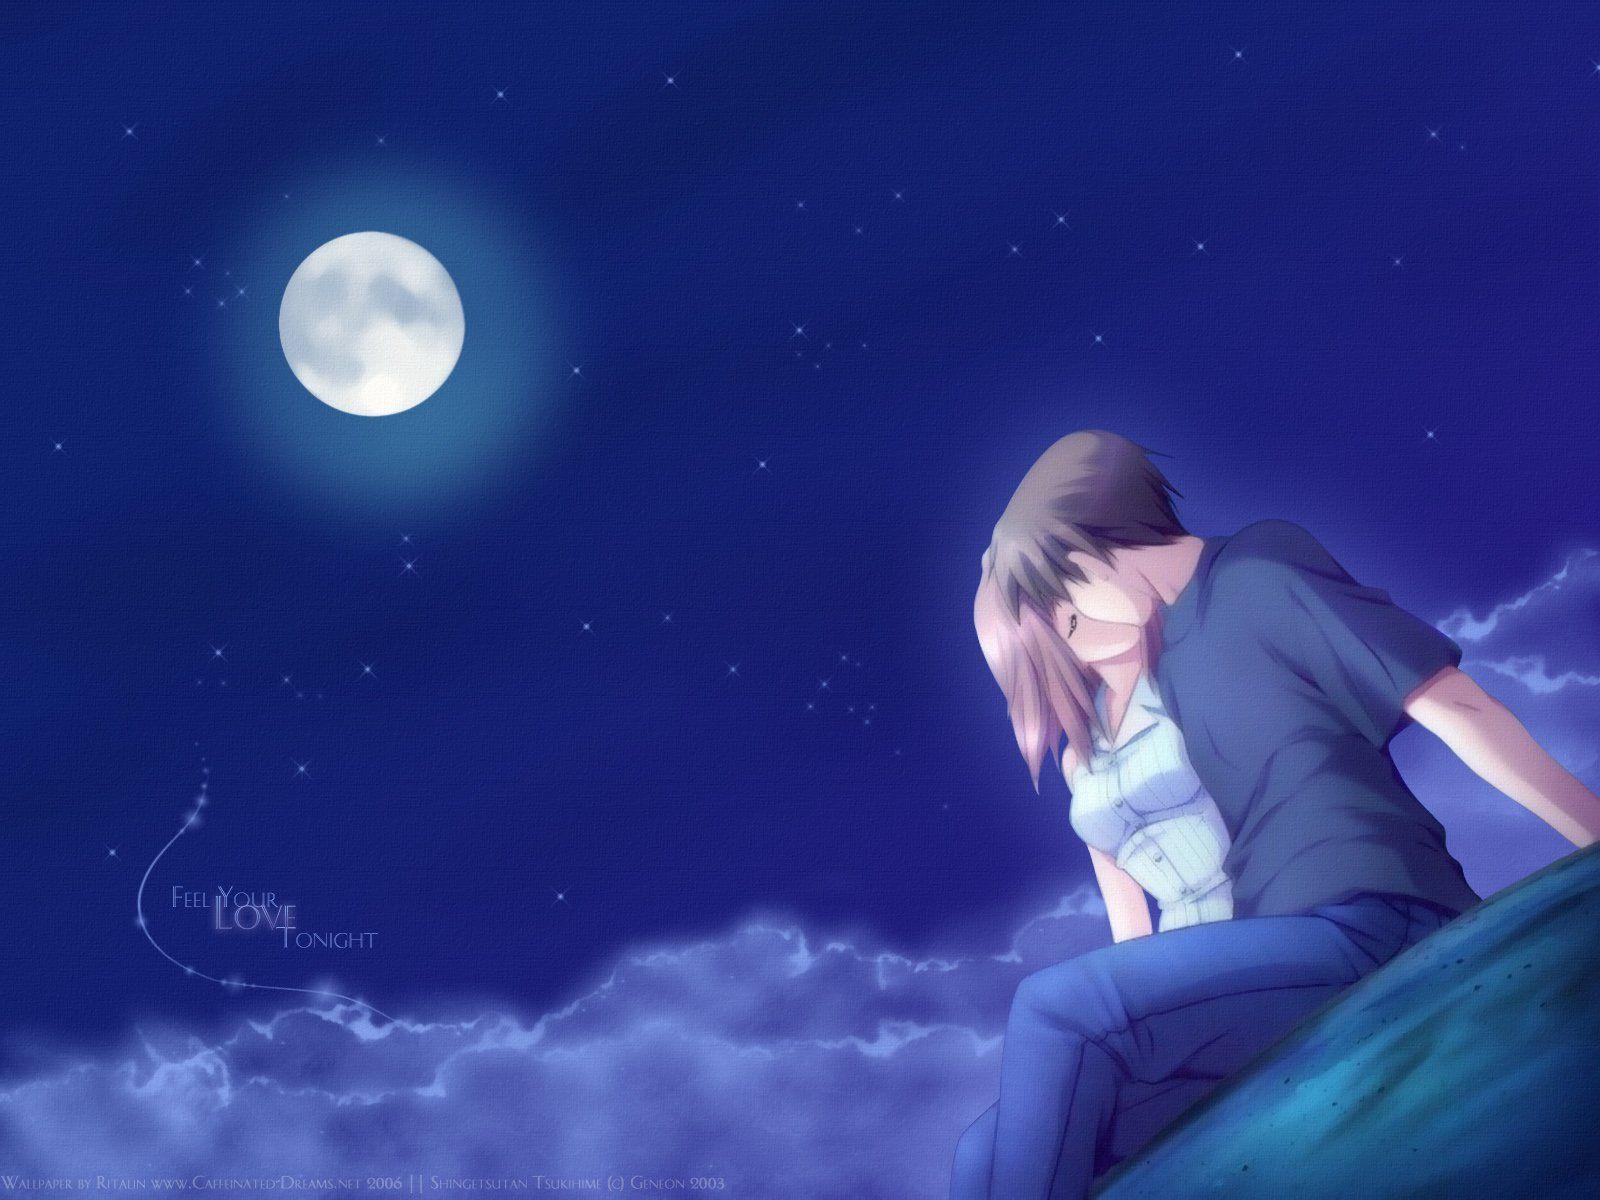 Romance Anime HD Wallpapers - Top Free Romance Anime HD Backgrounds ...